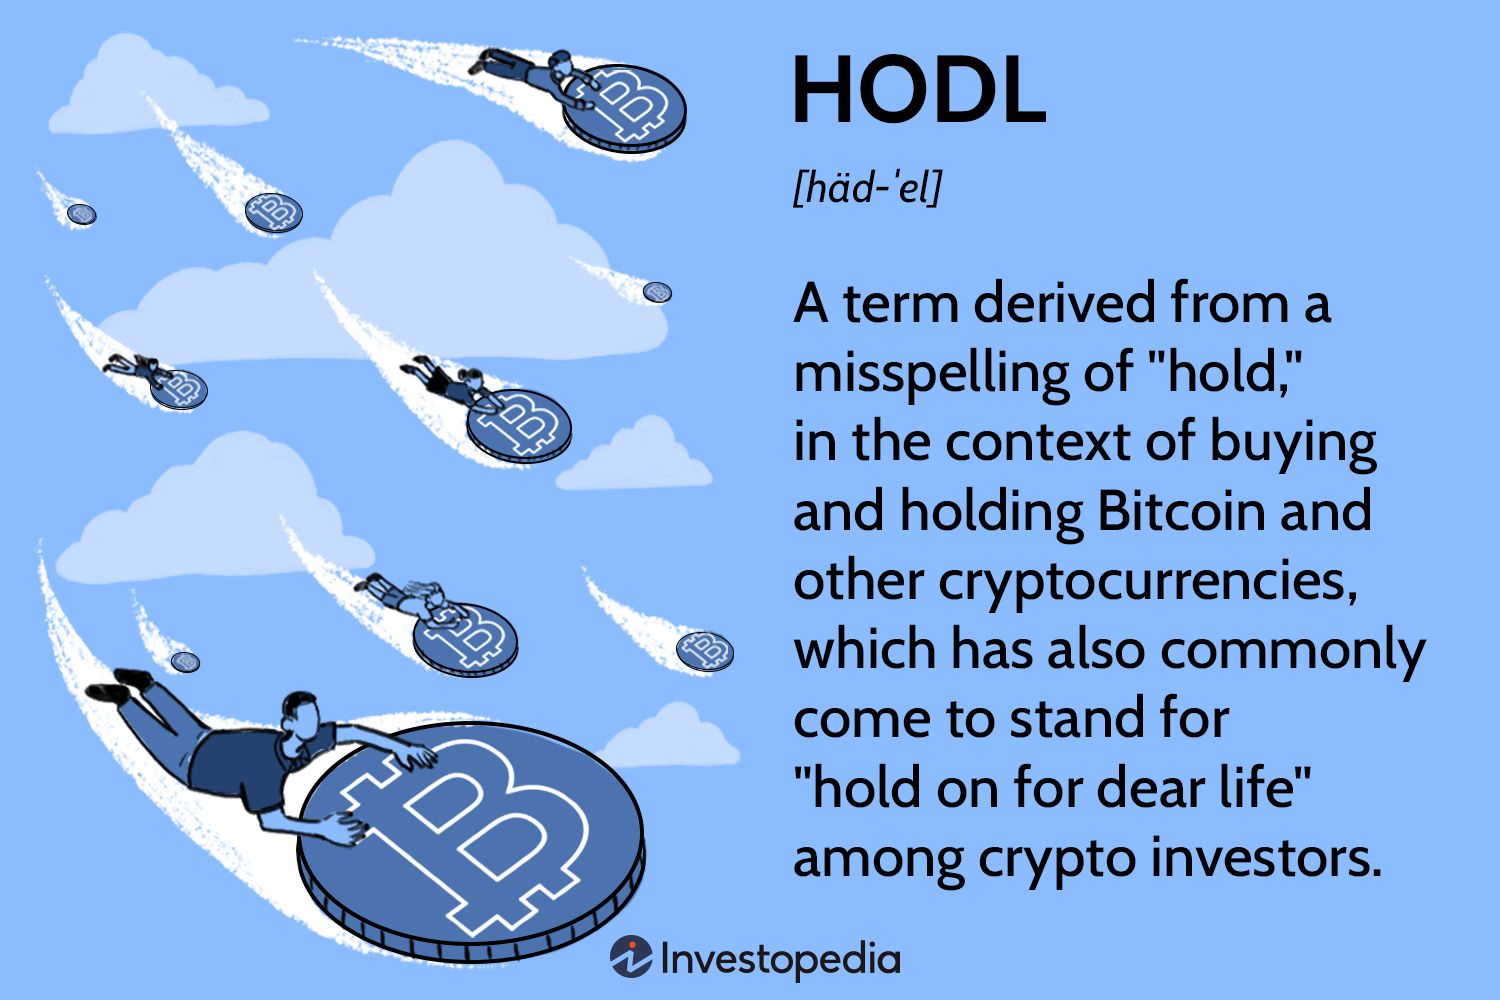 BitcoinTalk Chronicles: The Origin Of HODL — Citadel21